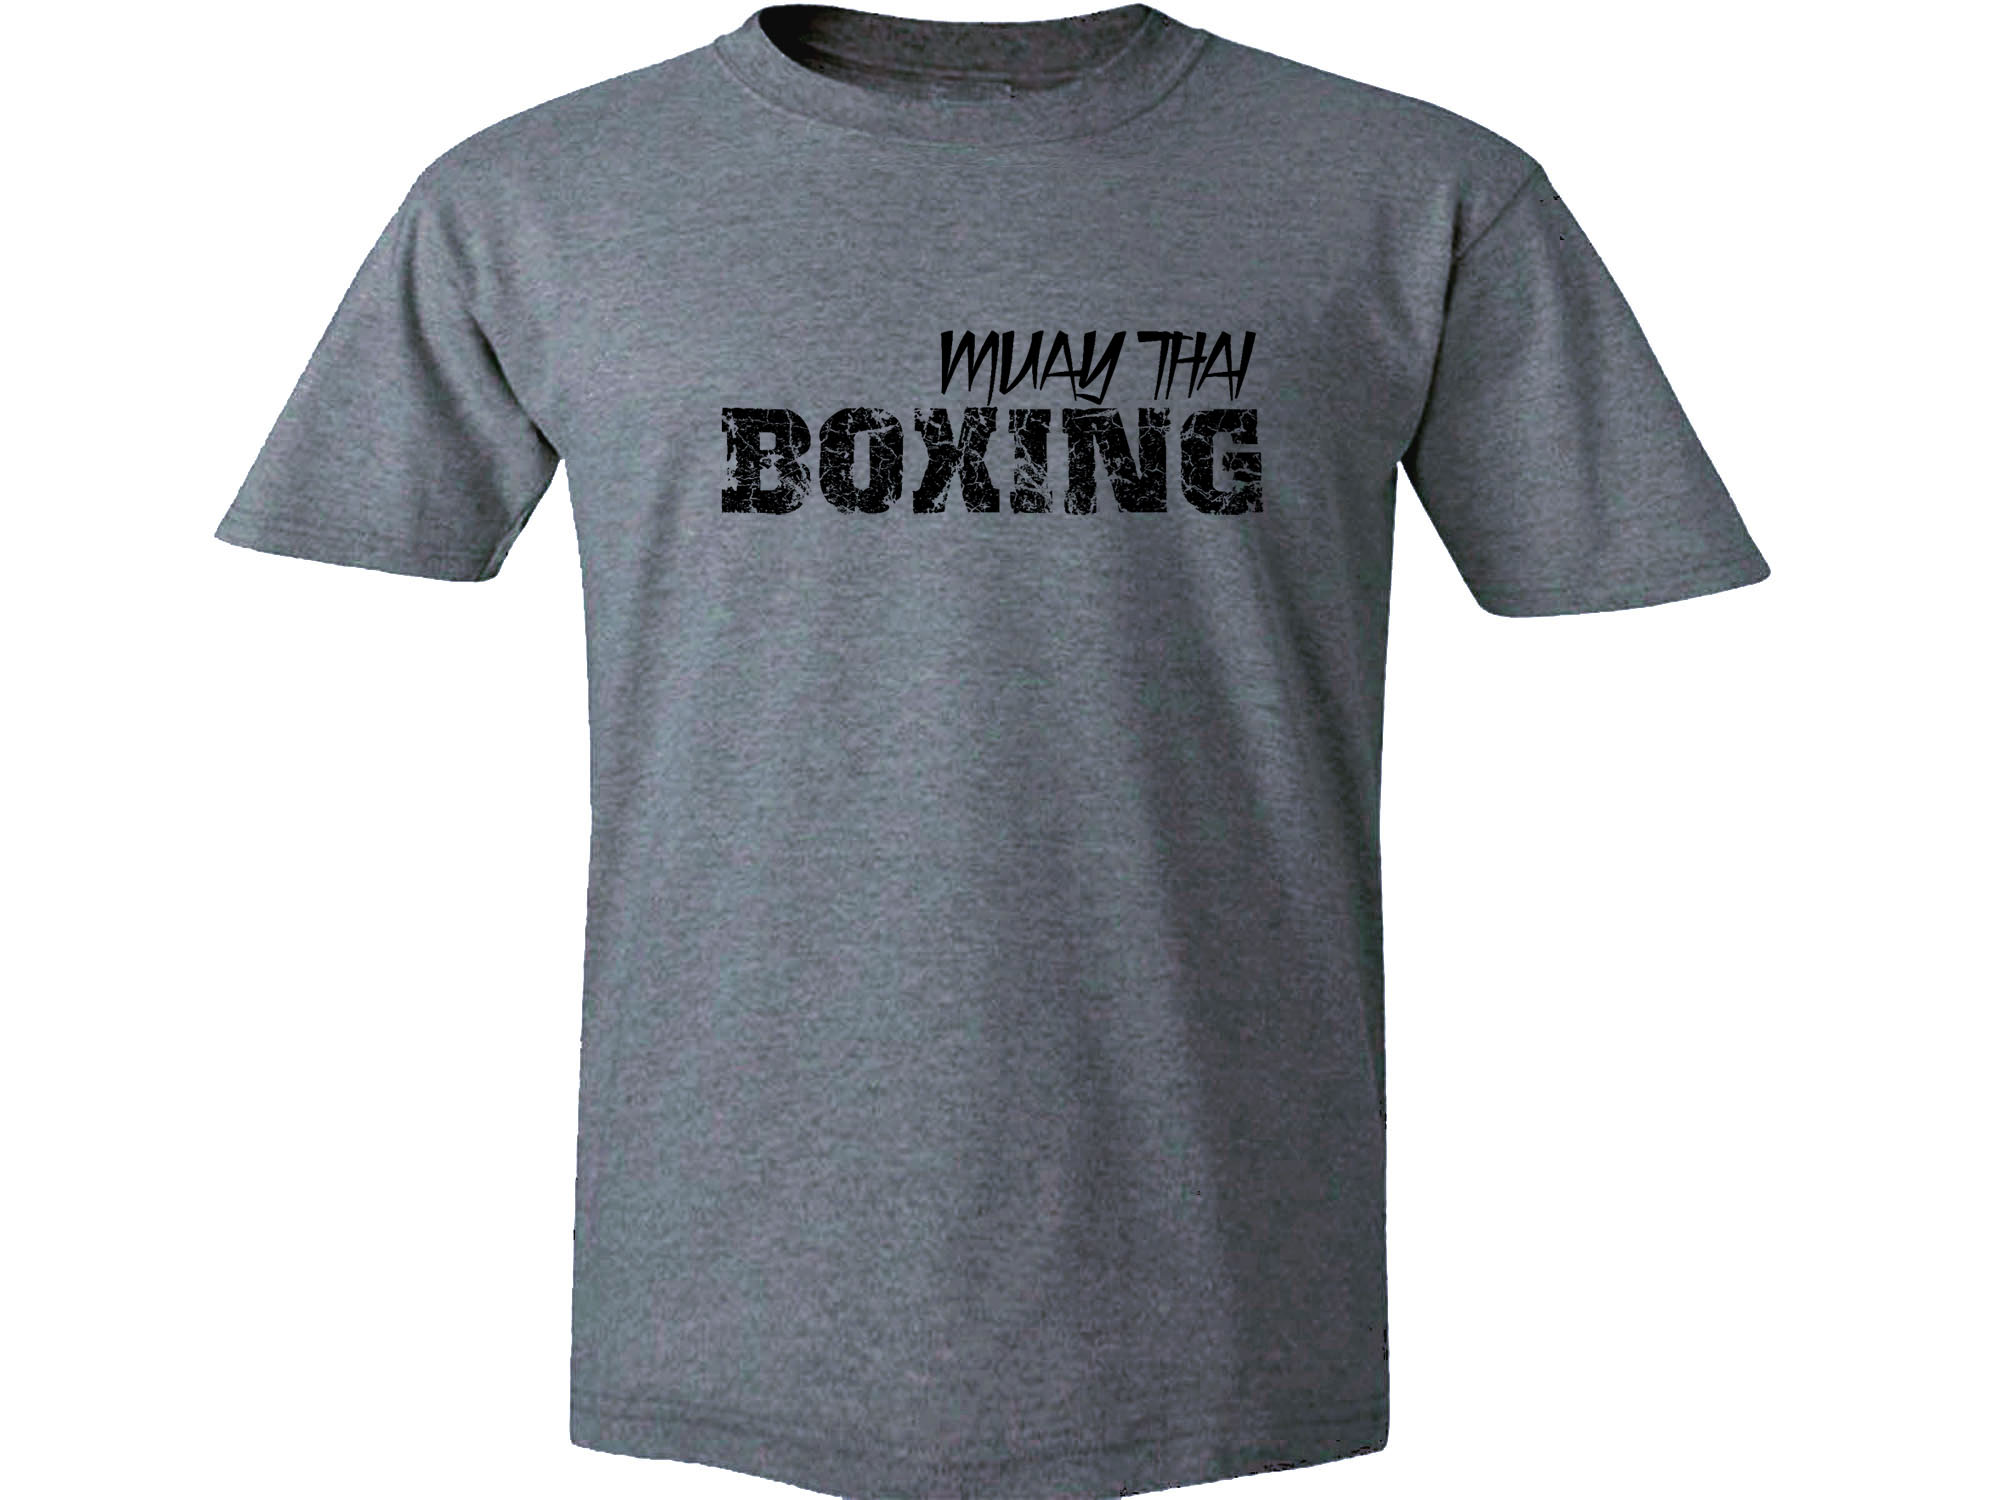 Muay Thai boxing distressed look gray t-shirt